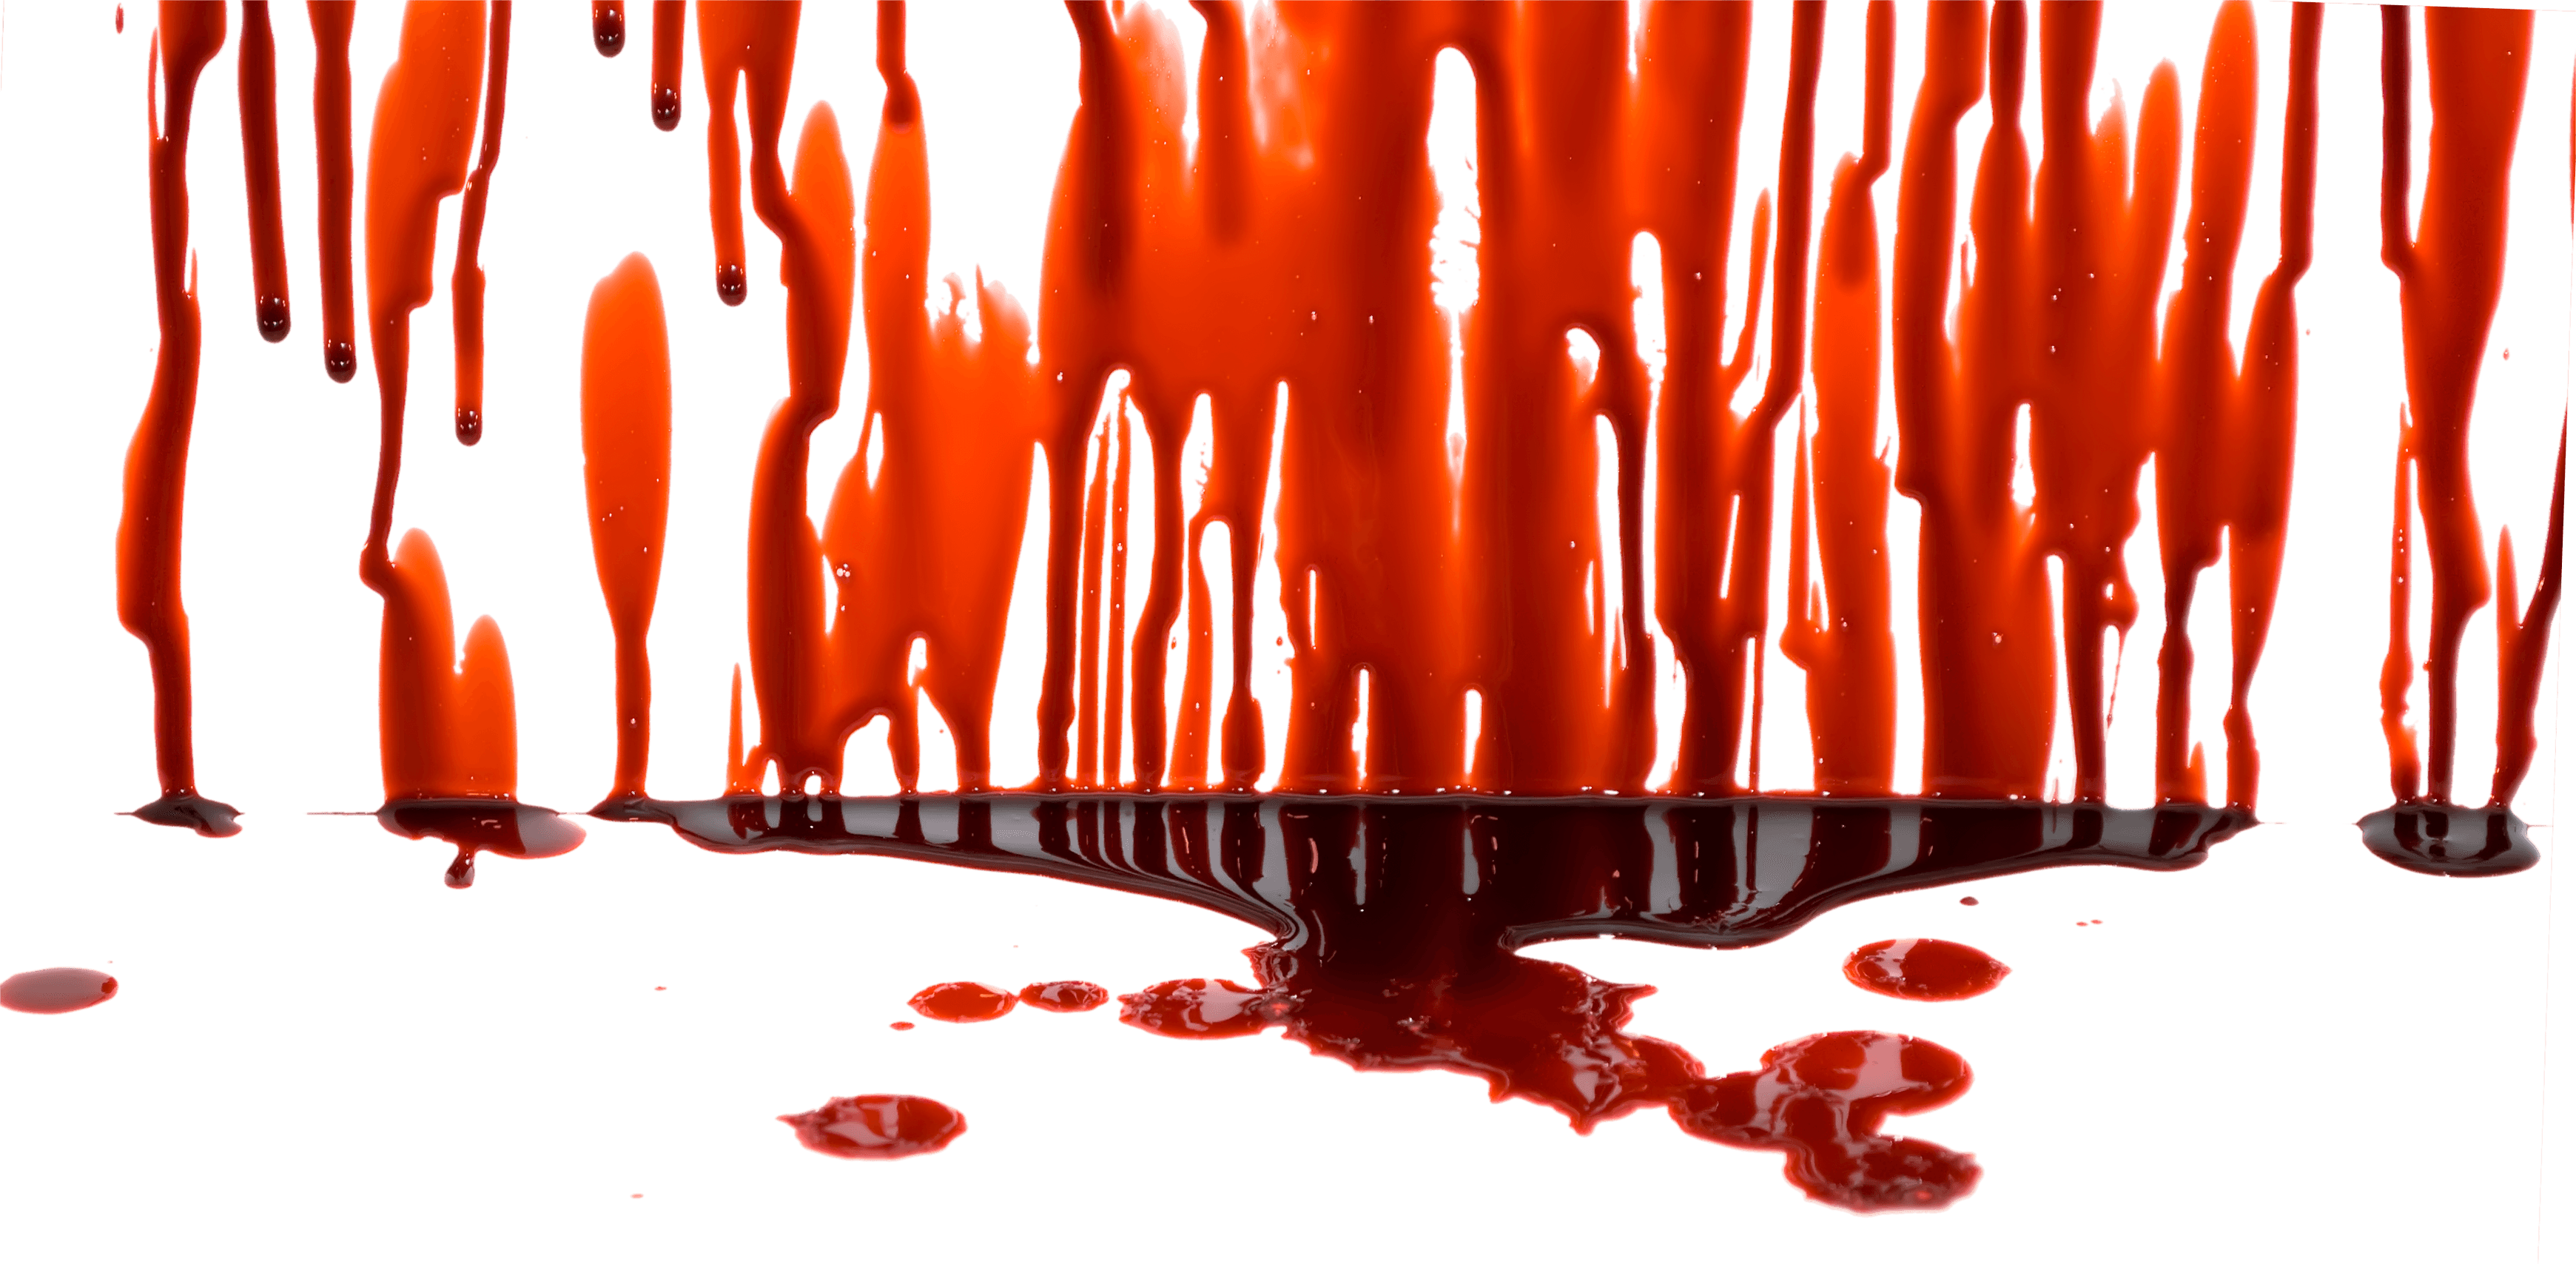 Blood Wallpaper - Blood Png Image png download - 3481*1708 - Free